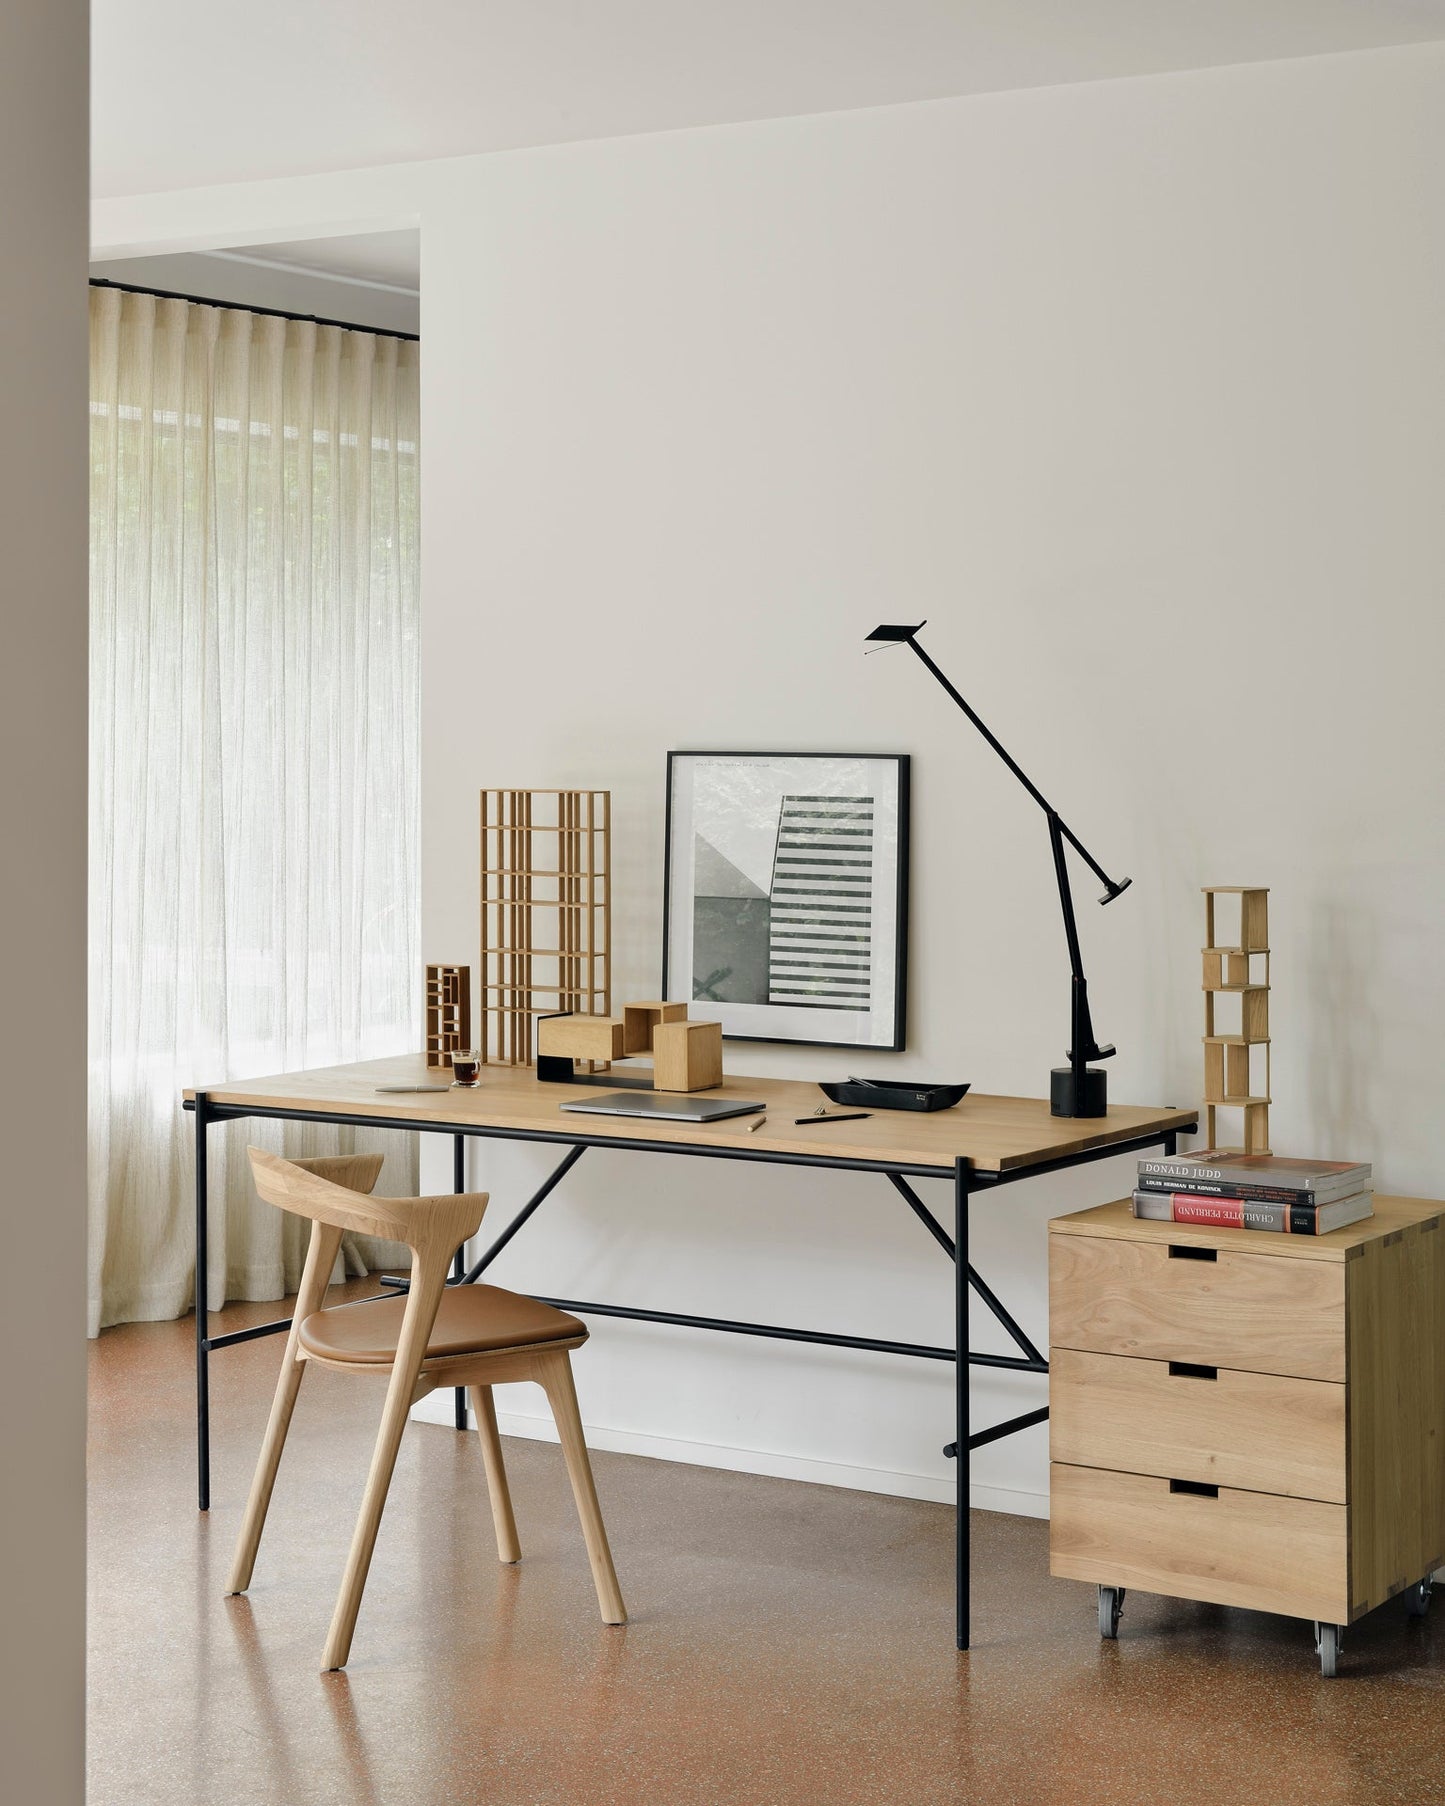 Load image into Gallery viewer, Bok Dining Chair by Alain Van Havre | Oak | Cognac Leather
